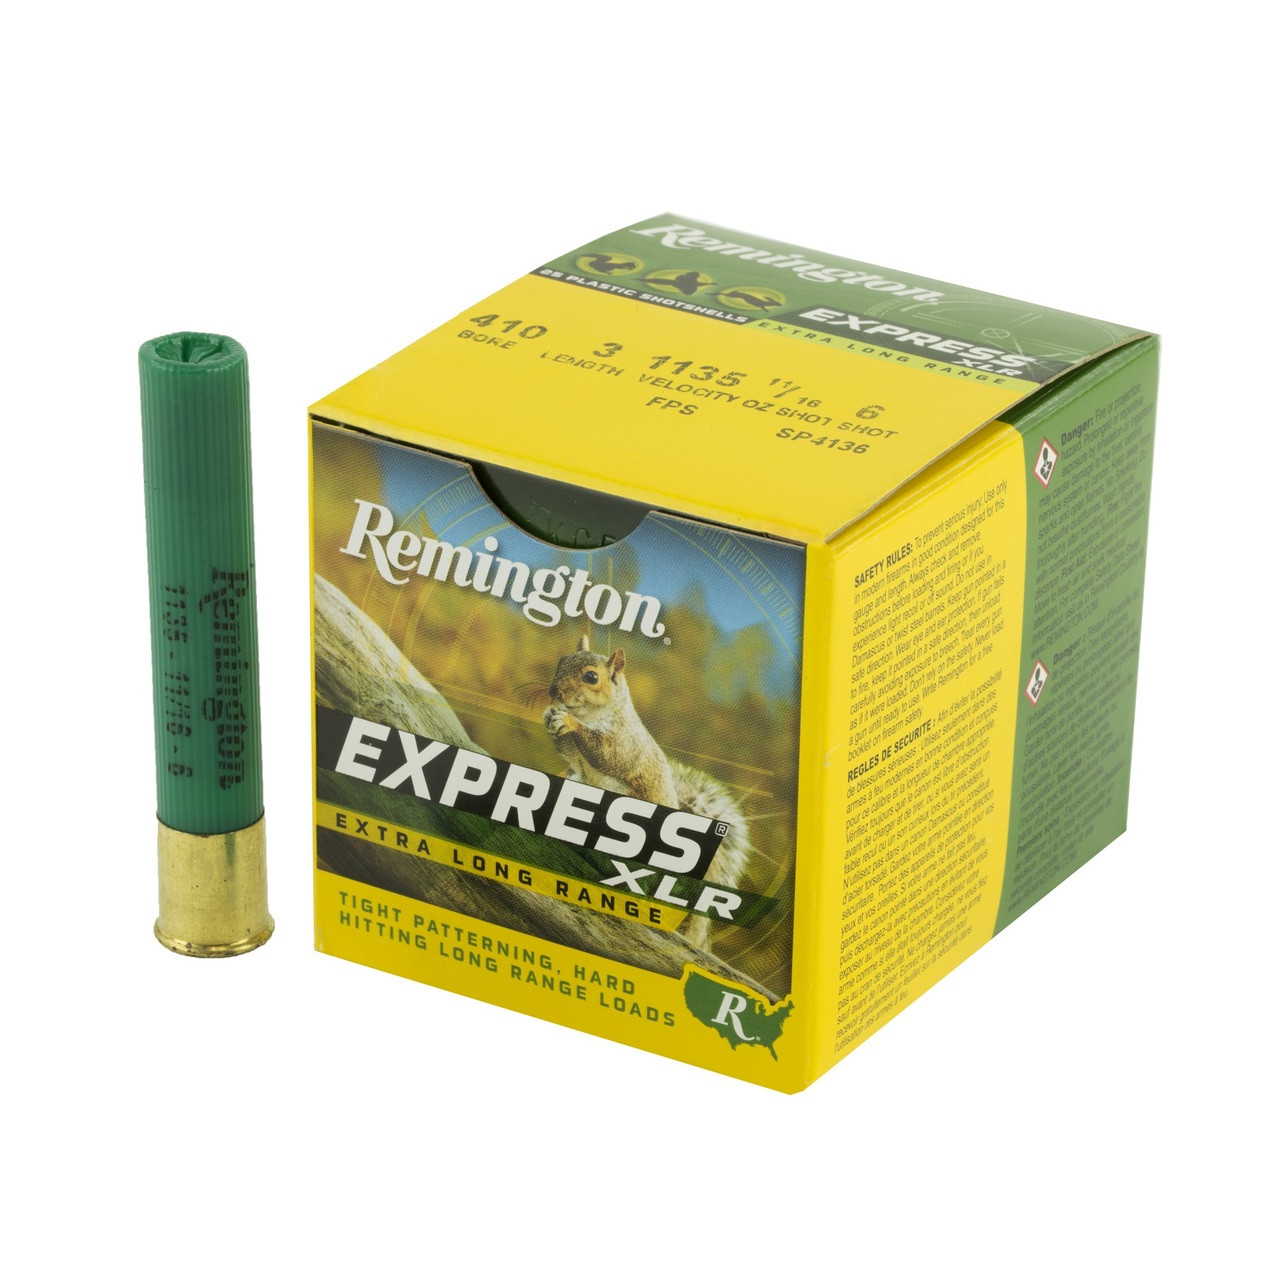 Remington Express Long Range Loads, .410 Gauge, 3 Shell, 11/16 oz., 25  Rounds - 32194, 410 Gauge Shells at Sportsman's Guide